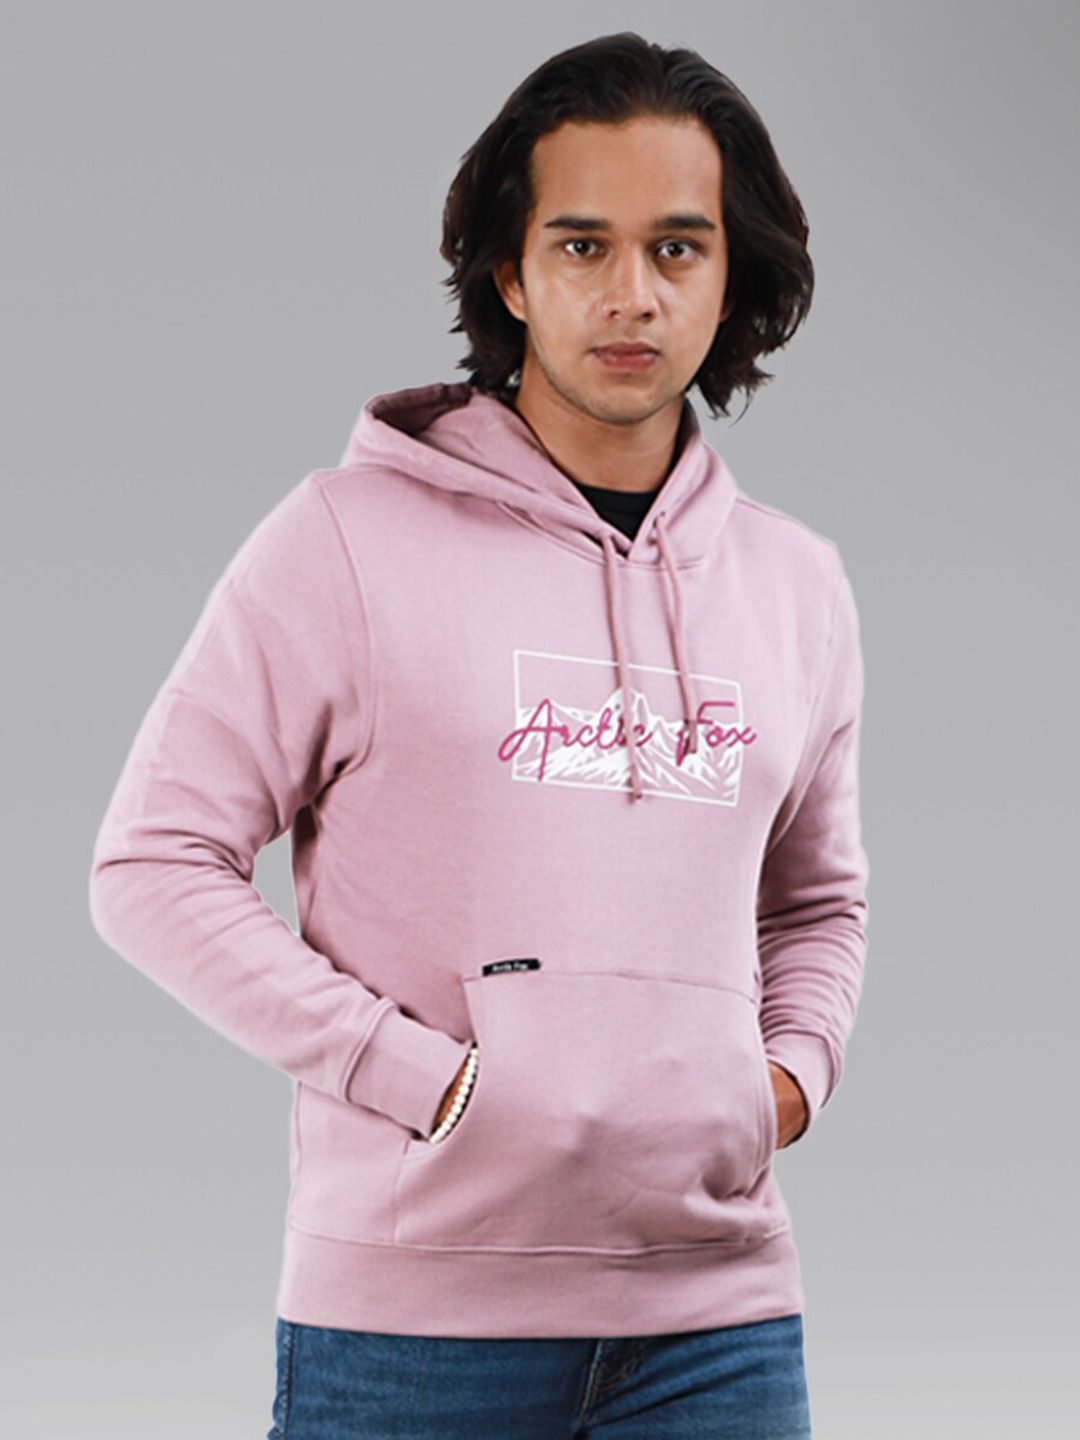 Arctic Fox Unisex Pink Printed Hooded Sweatshirt Price in India